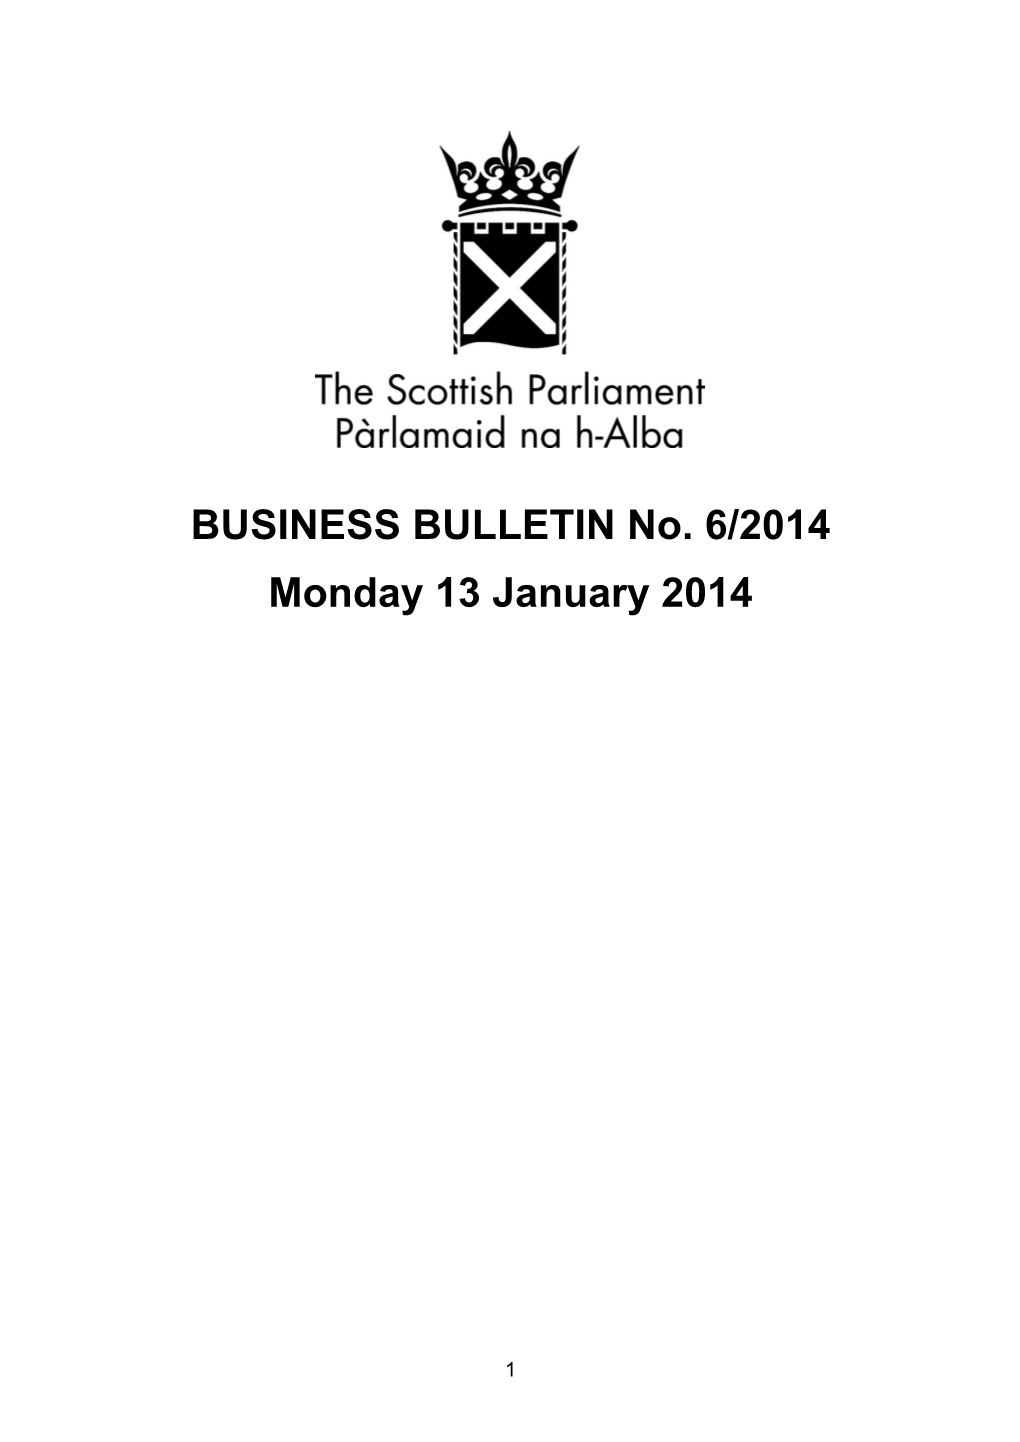 BUSINESS BULLETIN No. 6/2014 Monday 13 January 2014